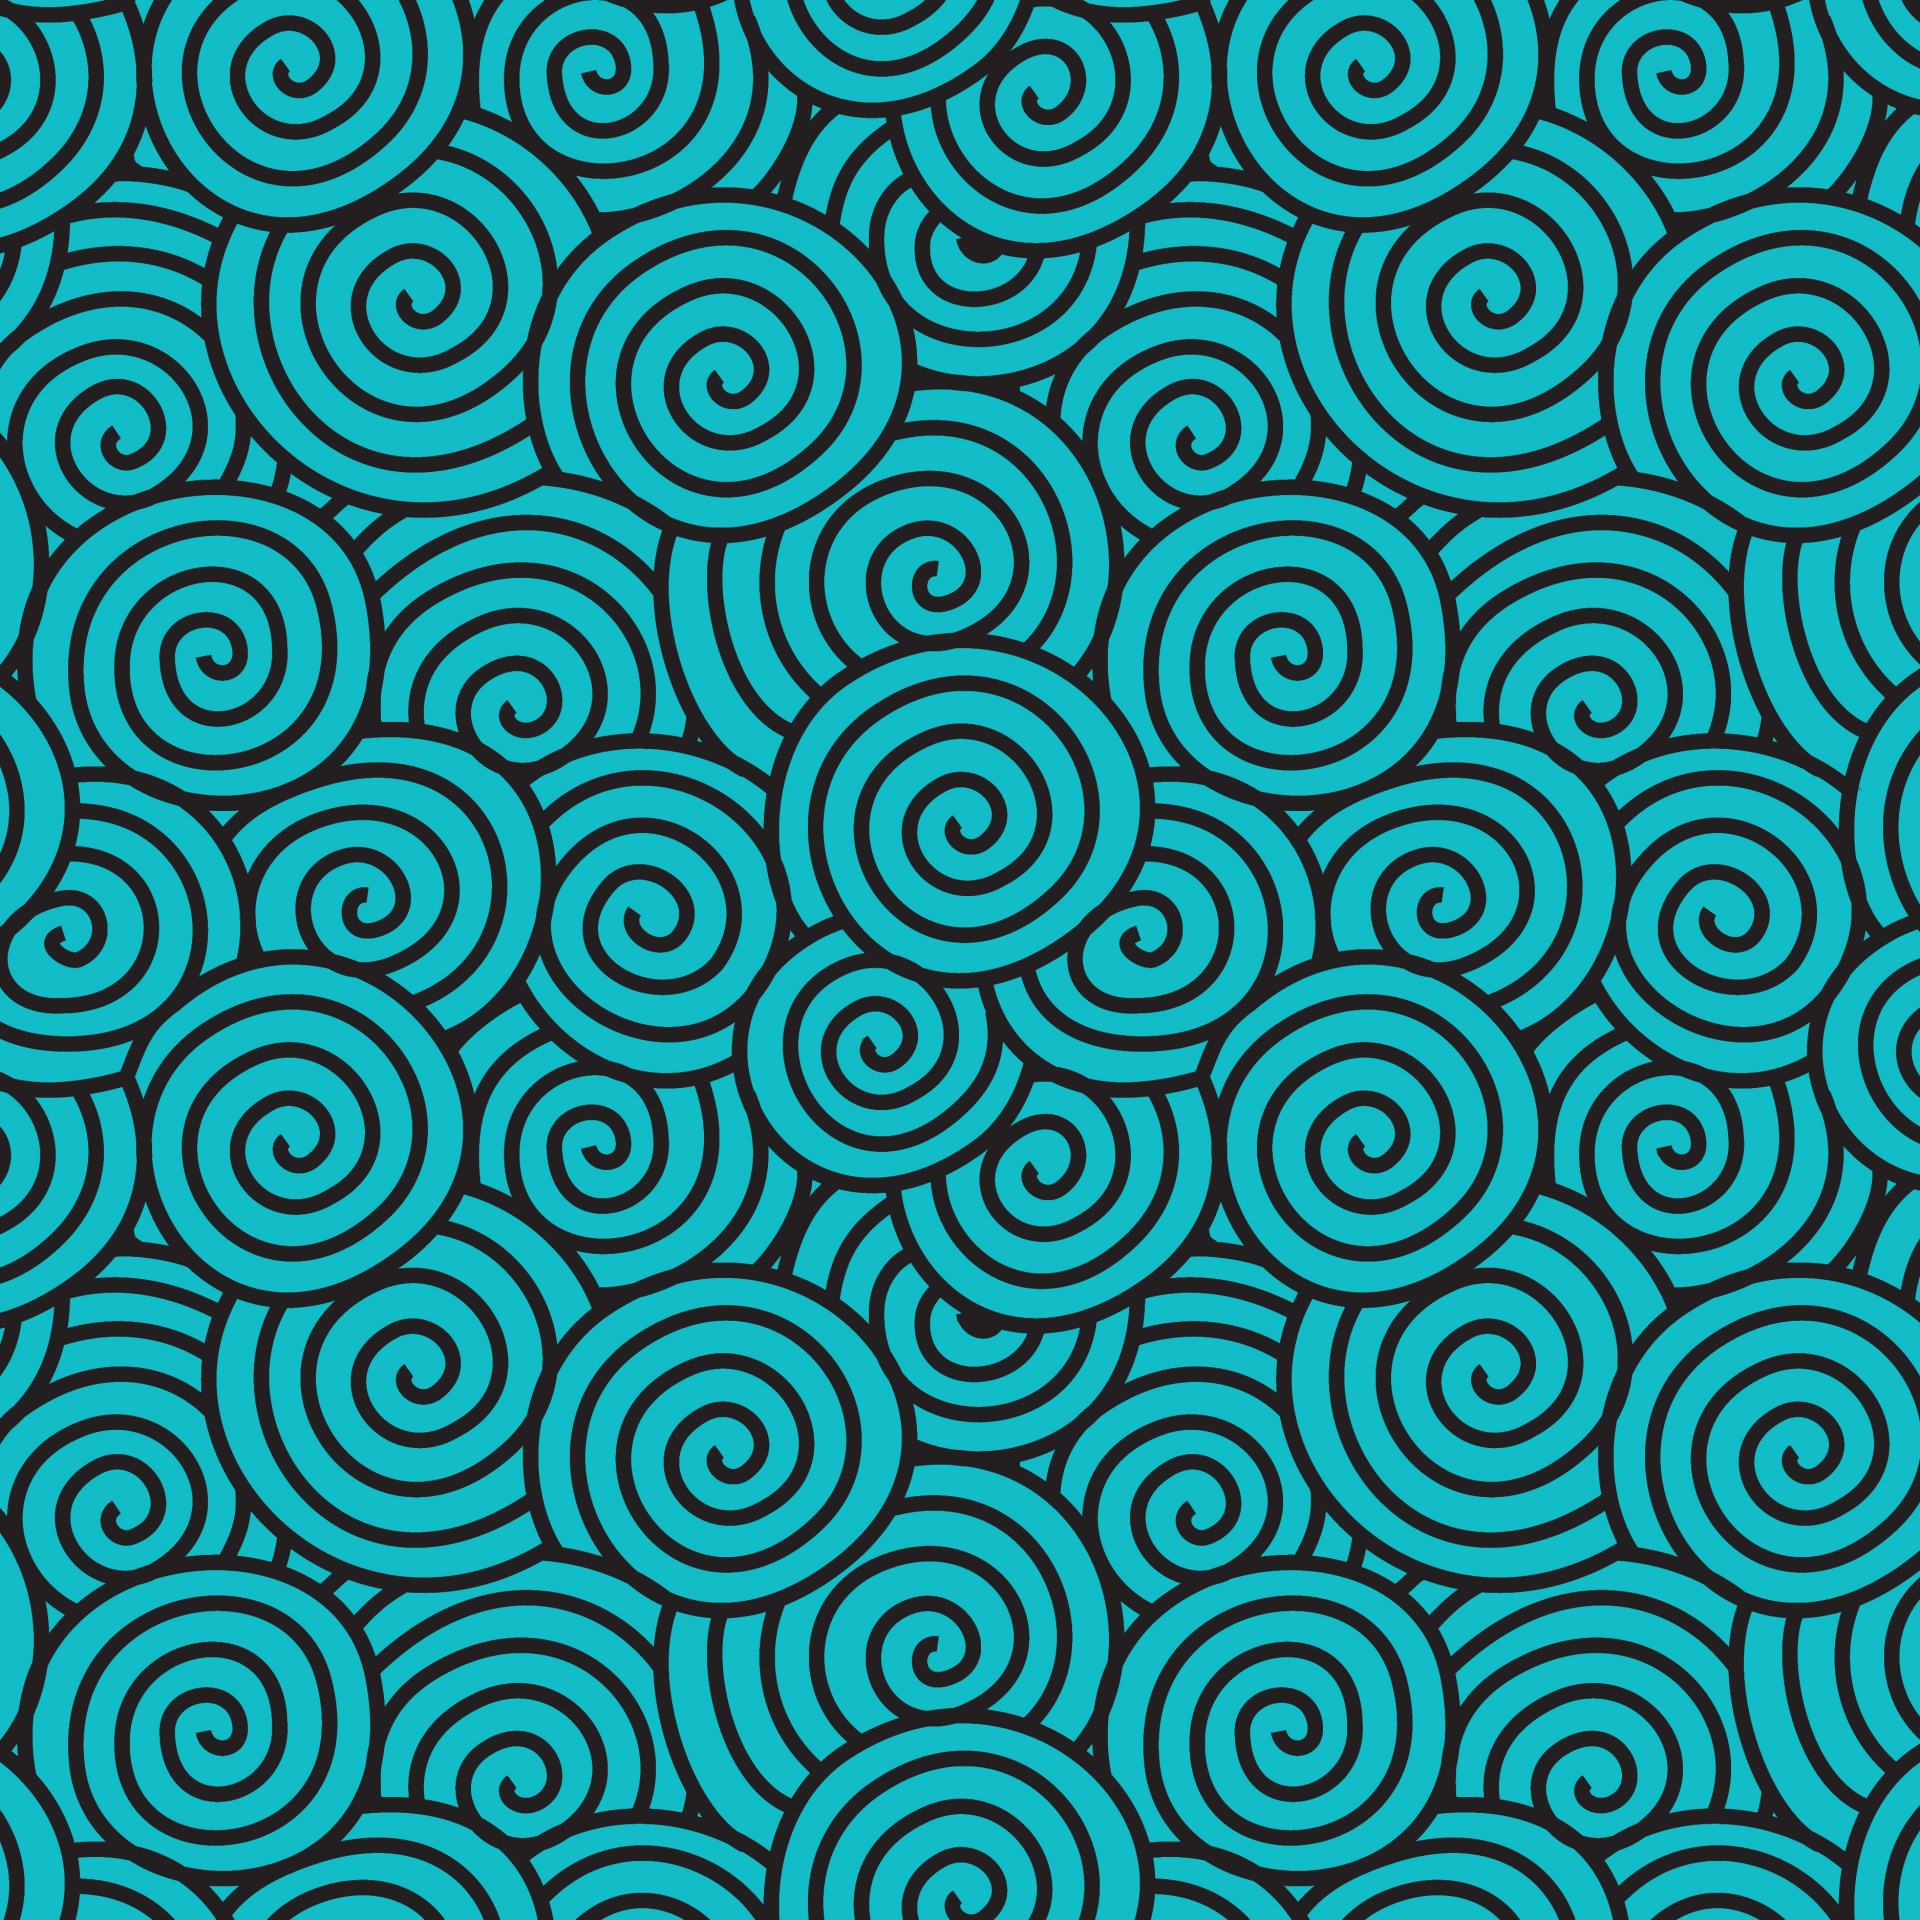 Retro Circles 60s Background